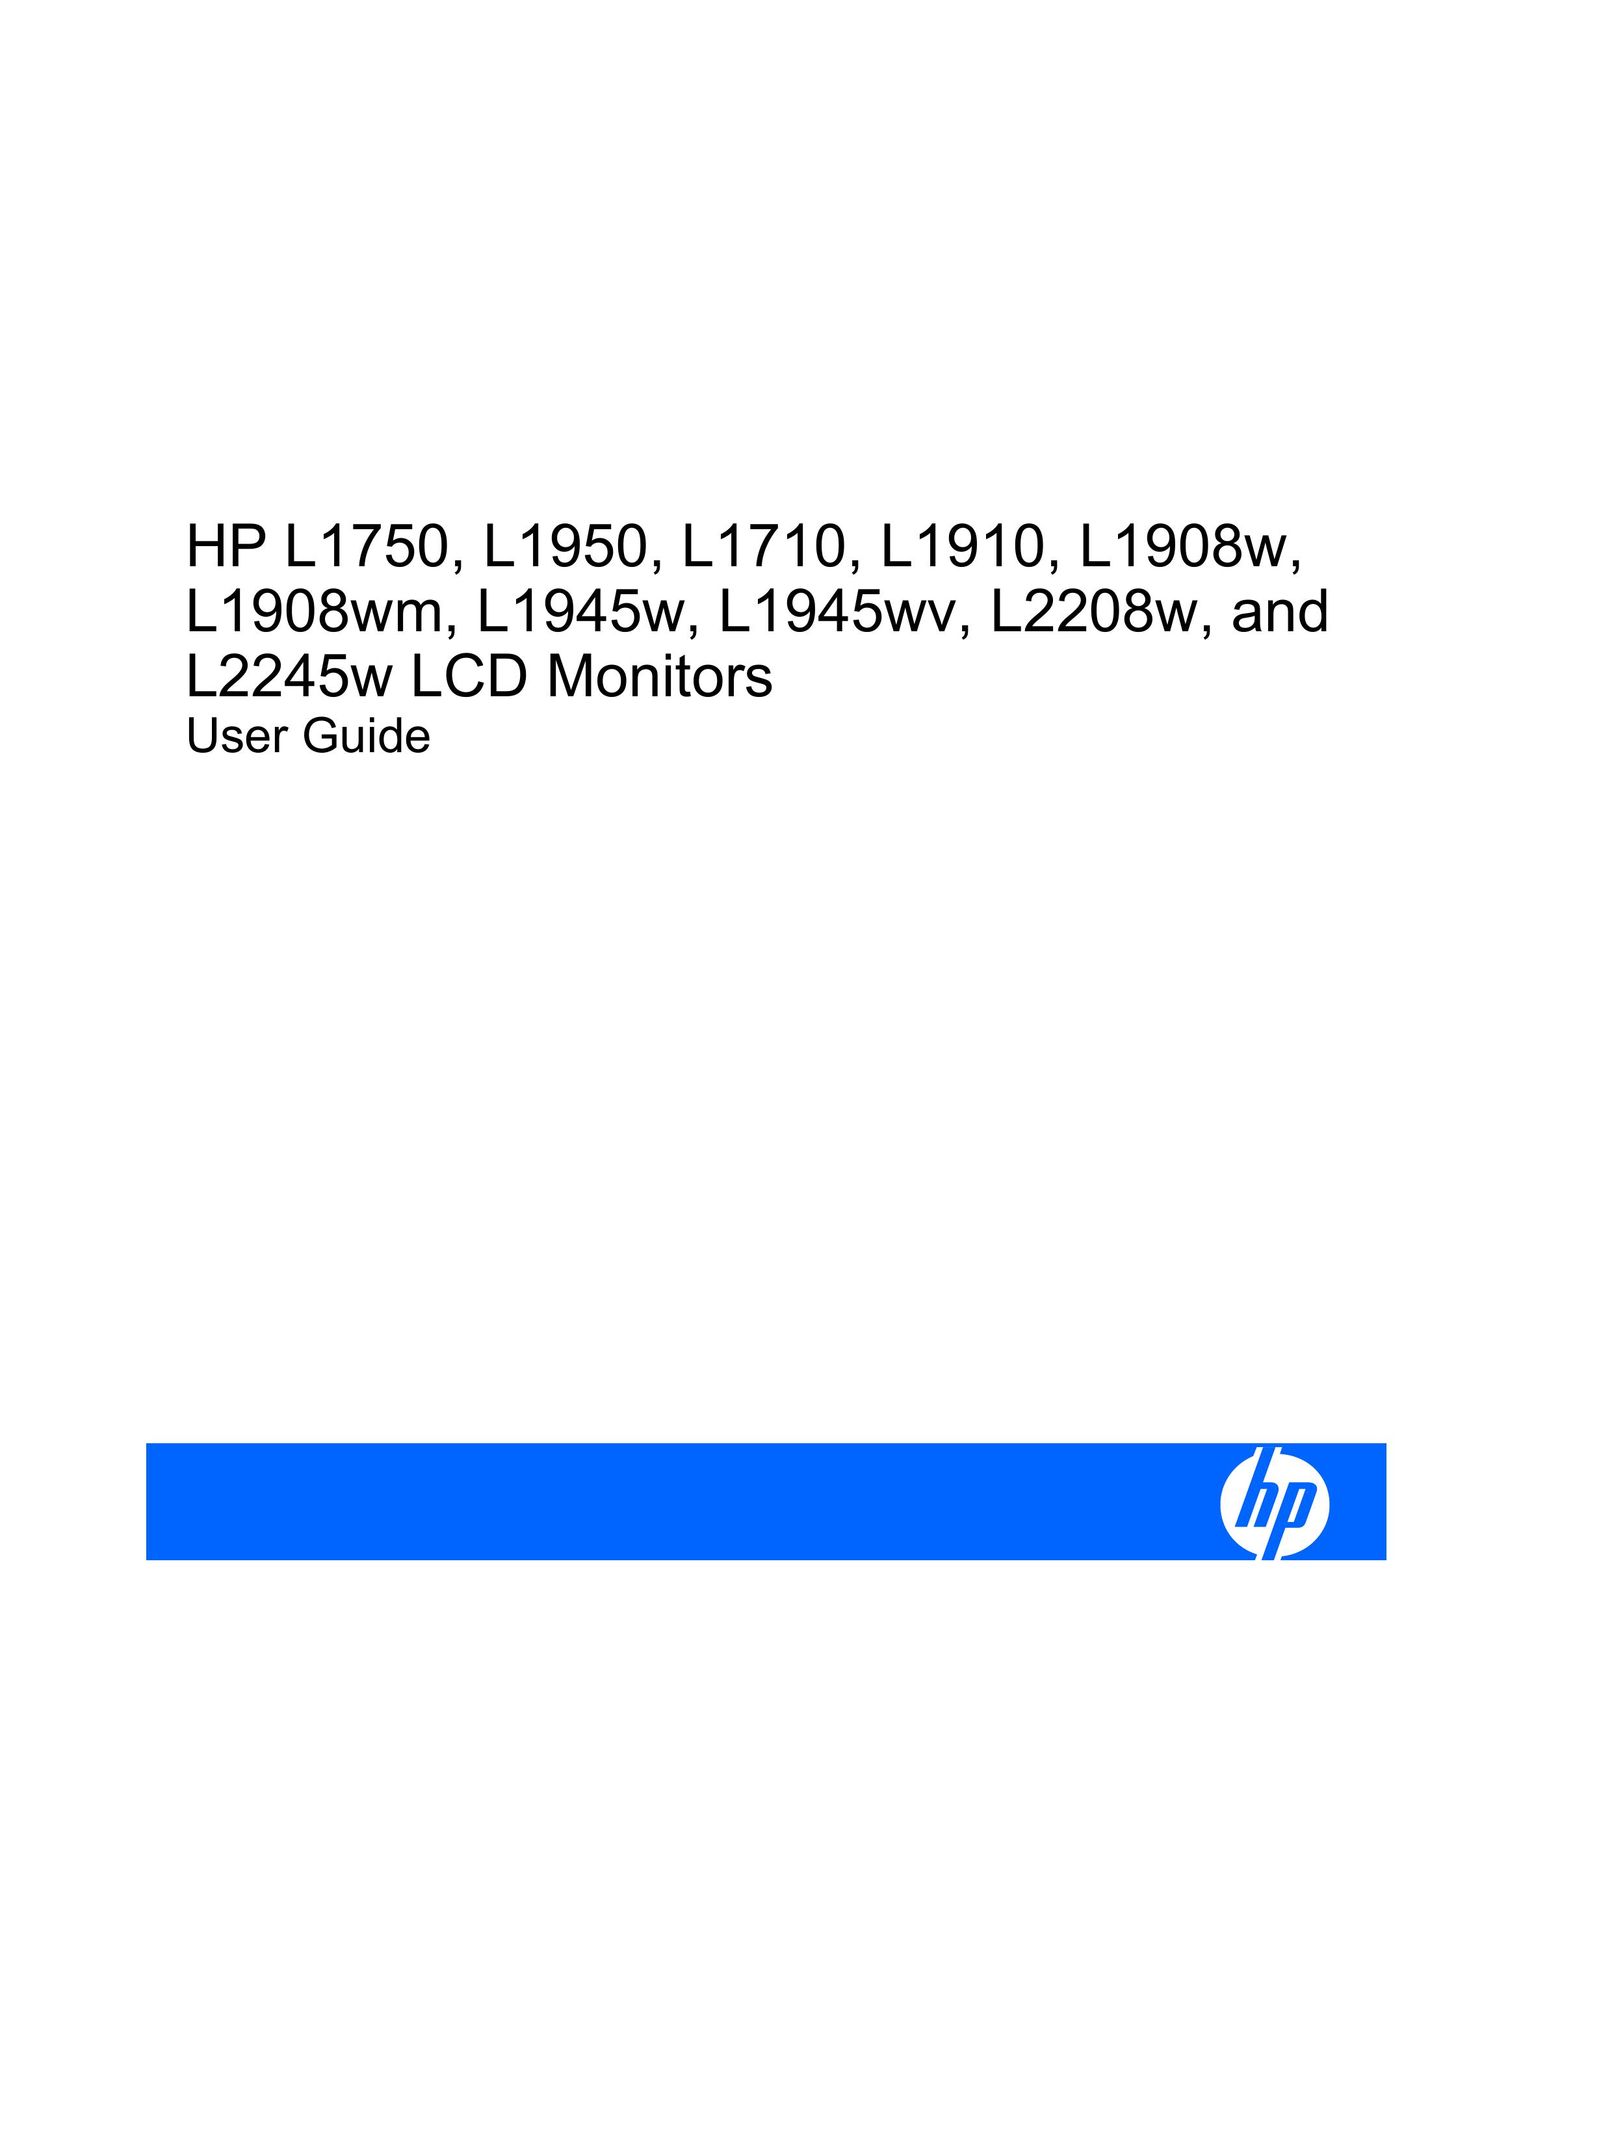 HP (Hewlett-Packard) L1910 Flat Panel Television User Manual